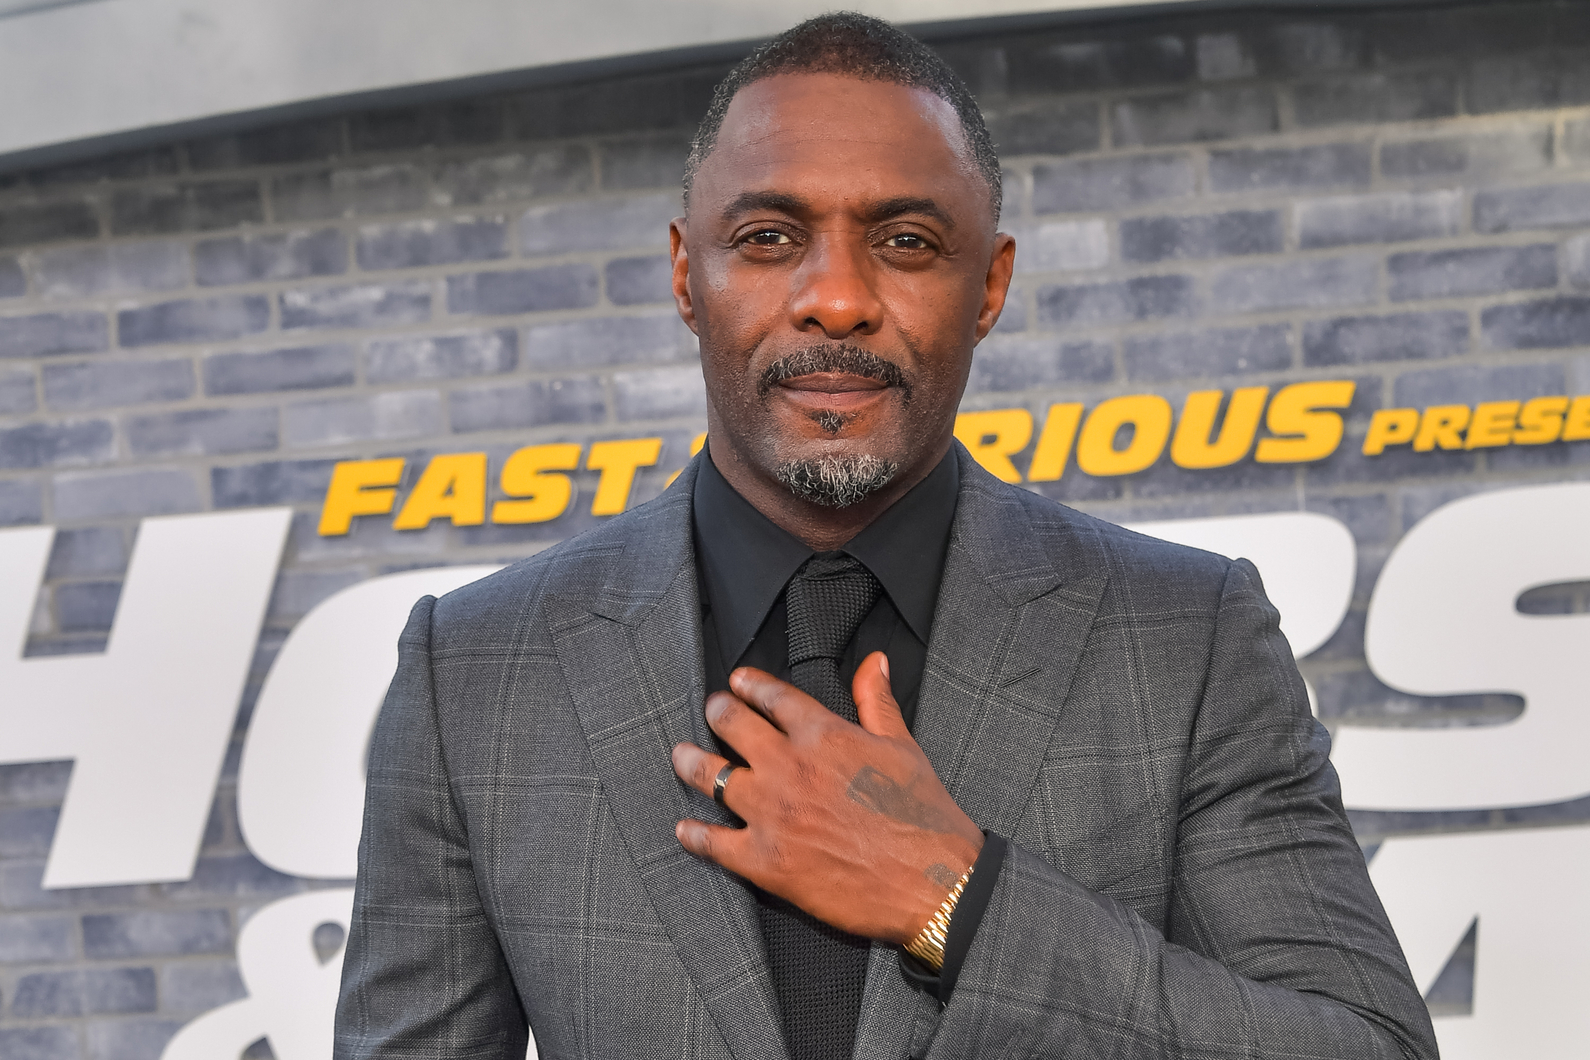 Idris Elba at movie premiere wearing grey and black suit